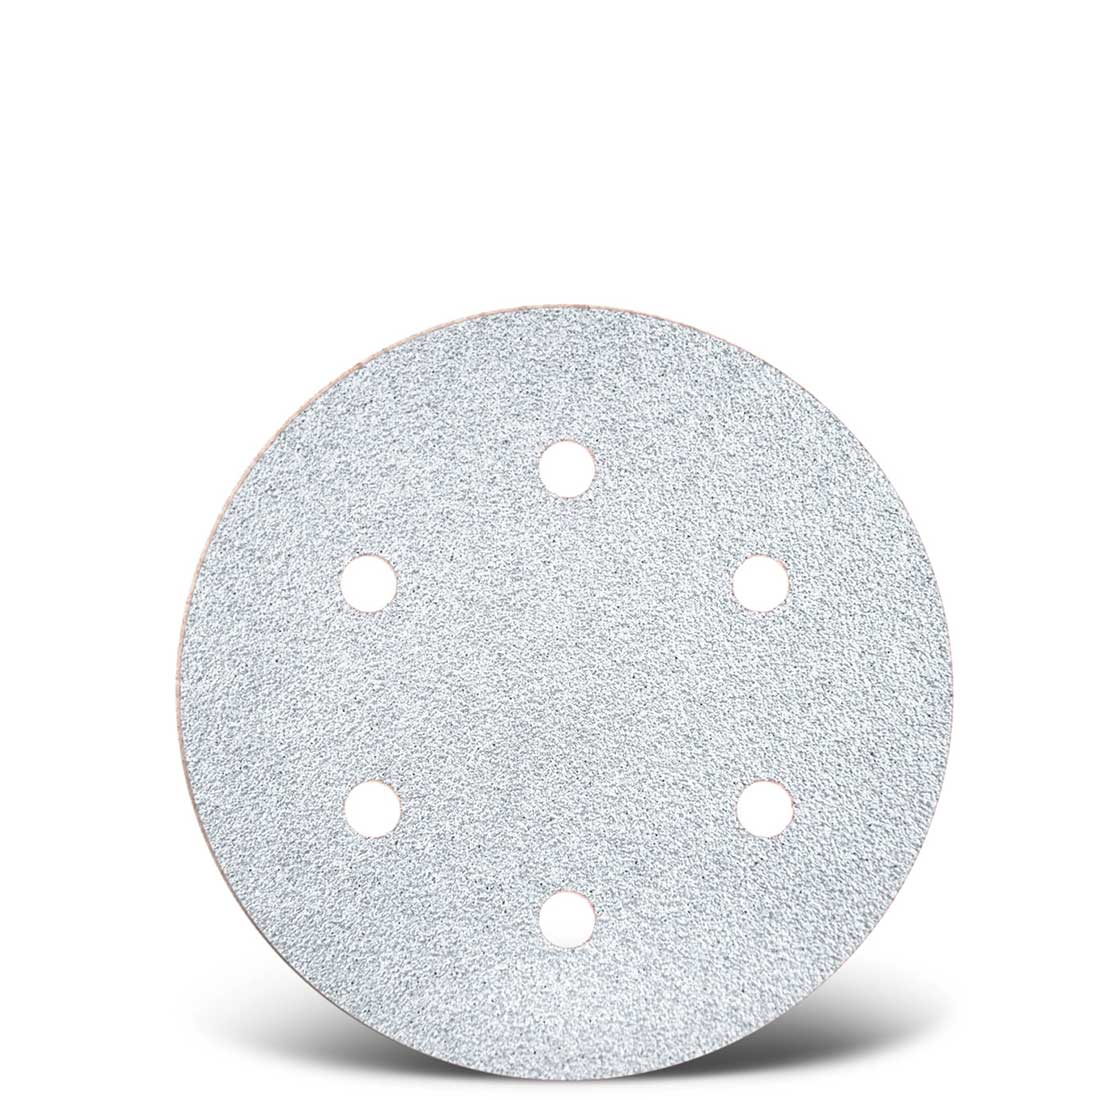 MENZER hook & loop sanding discs for random orbital sanders, G40–400, Ø 150 mm / 6 hole / stearated aluminium oxide